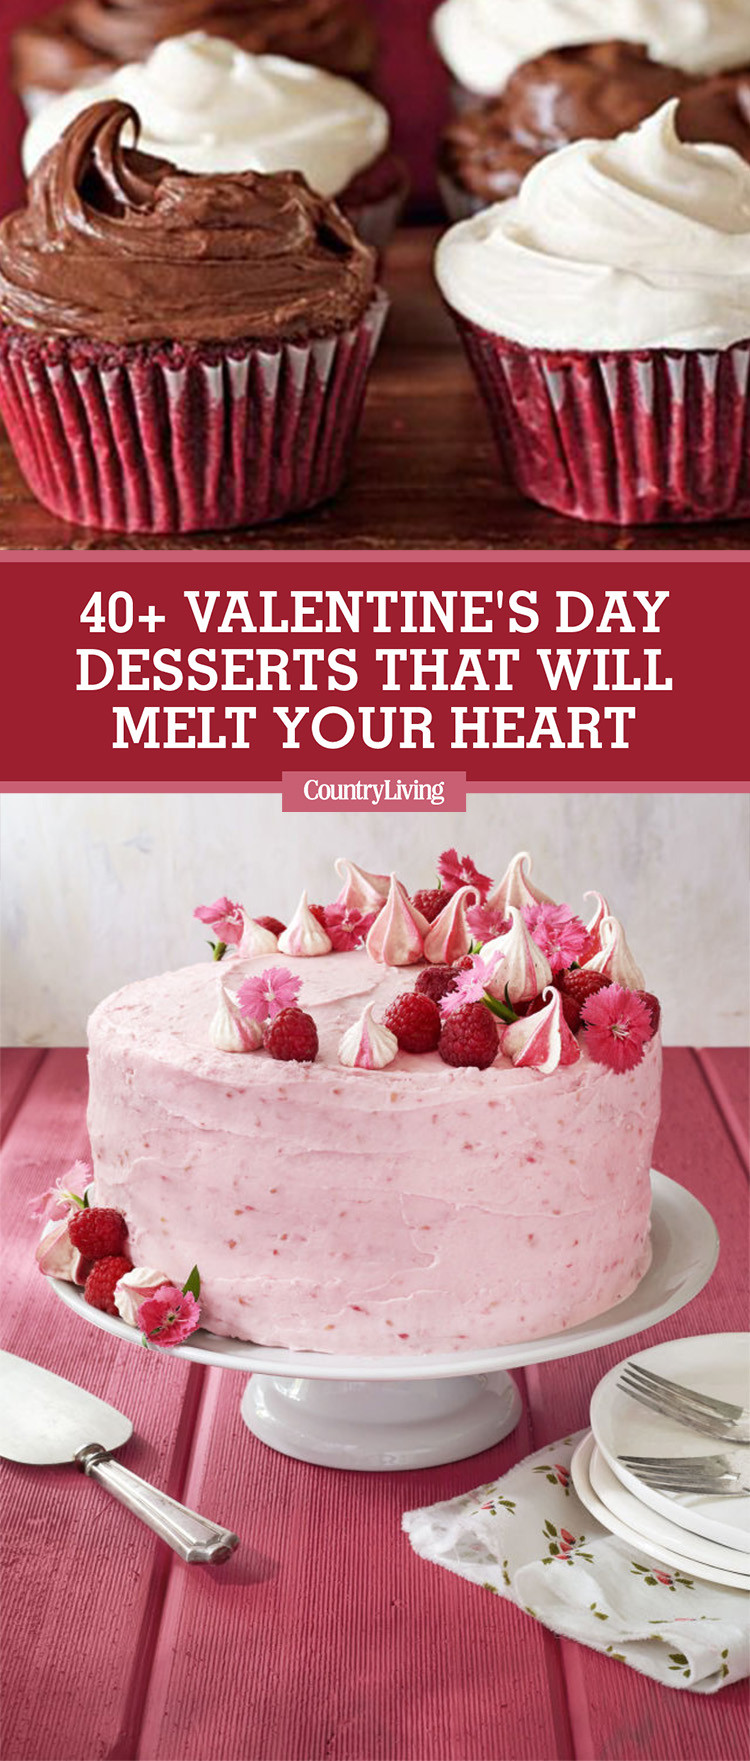 Easy Valentines Desserts
 42 Easy Valentine’s Day Desserts Best Recipes for